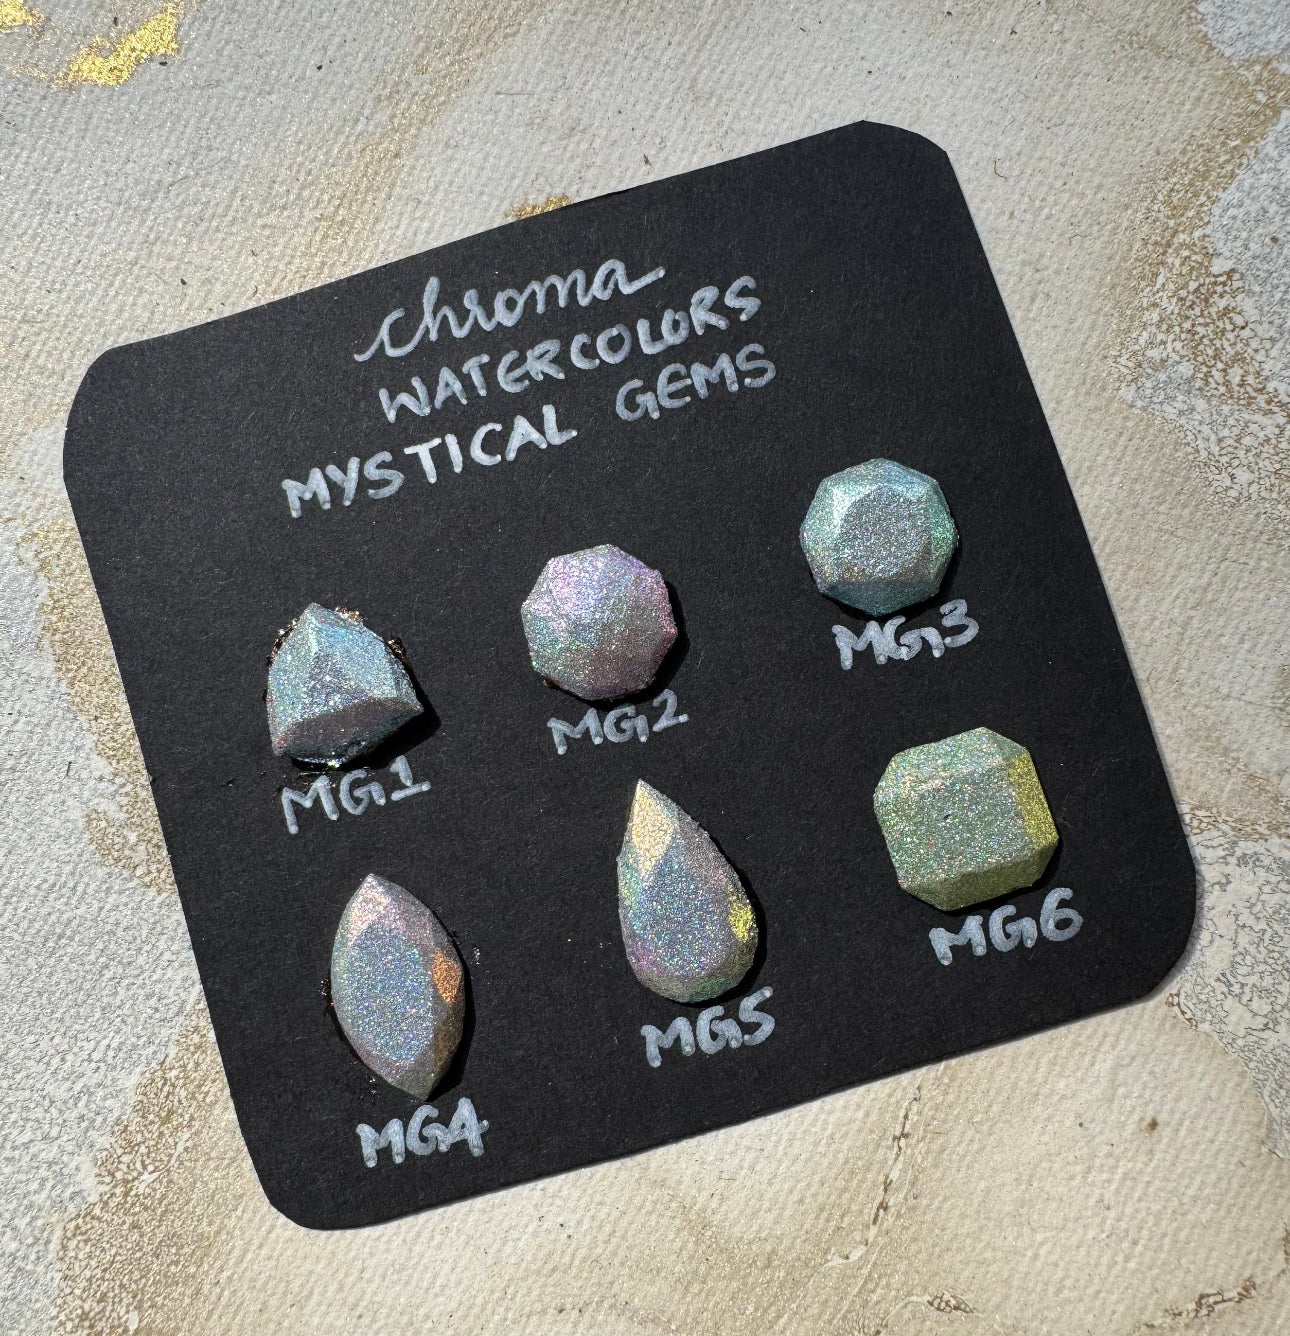 Cartilla de acuarelas artesanales, Set: "Mystical Gems" Chroma Watercolors